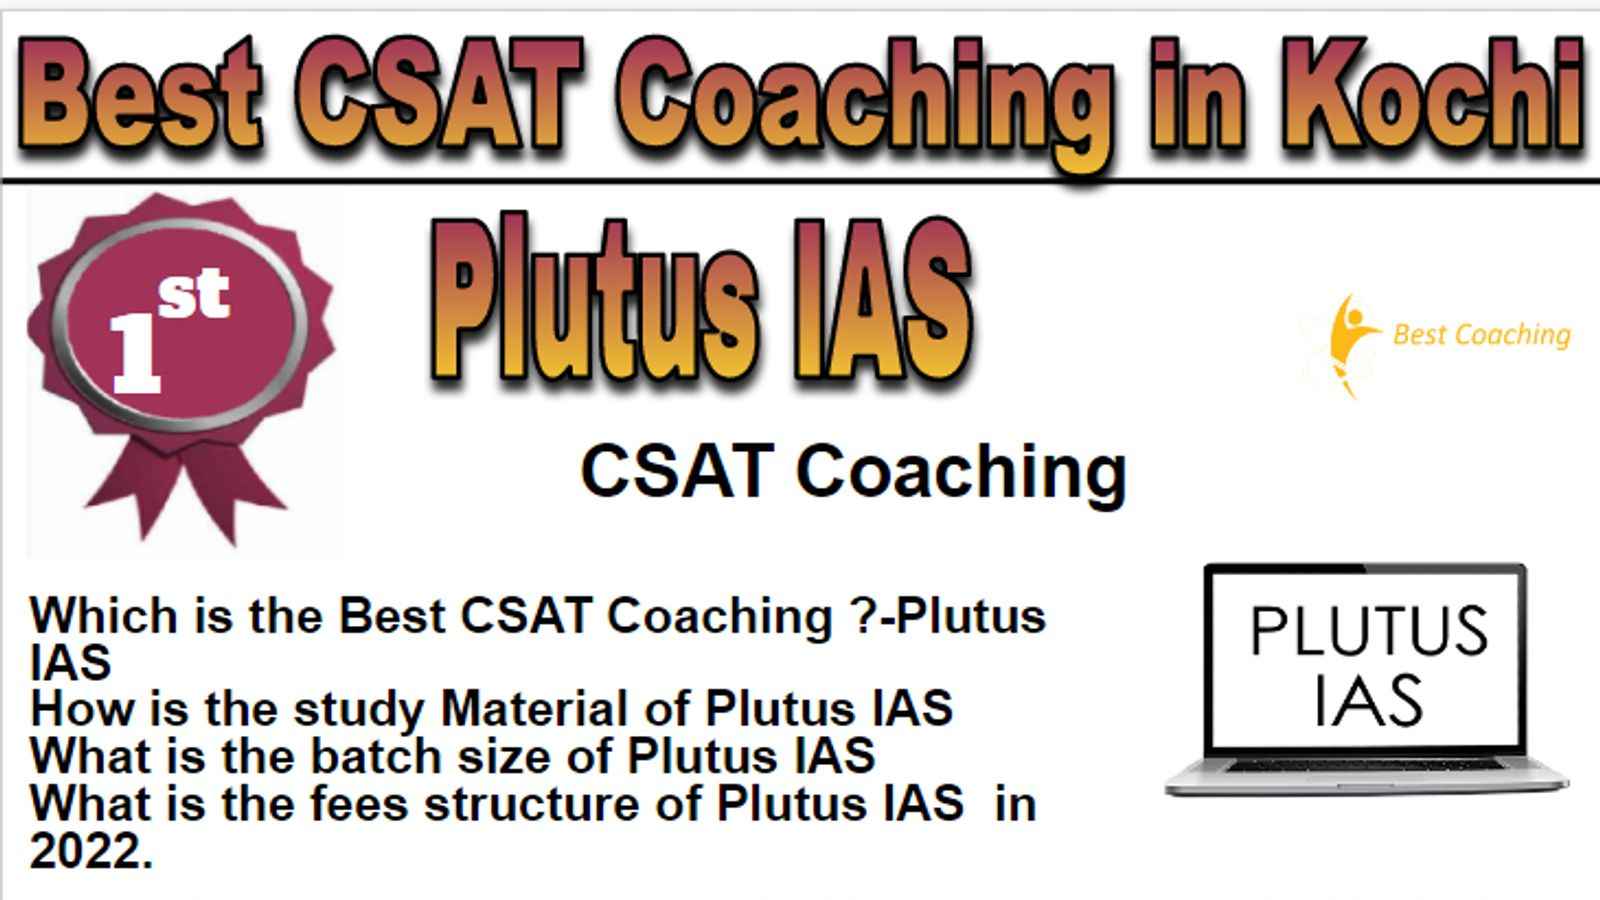 Rank 1 Best CSAT Coaching in Kochi